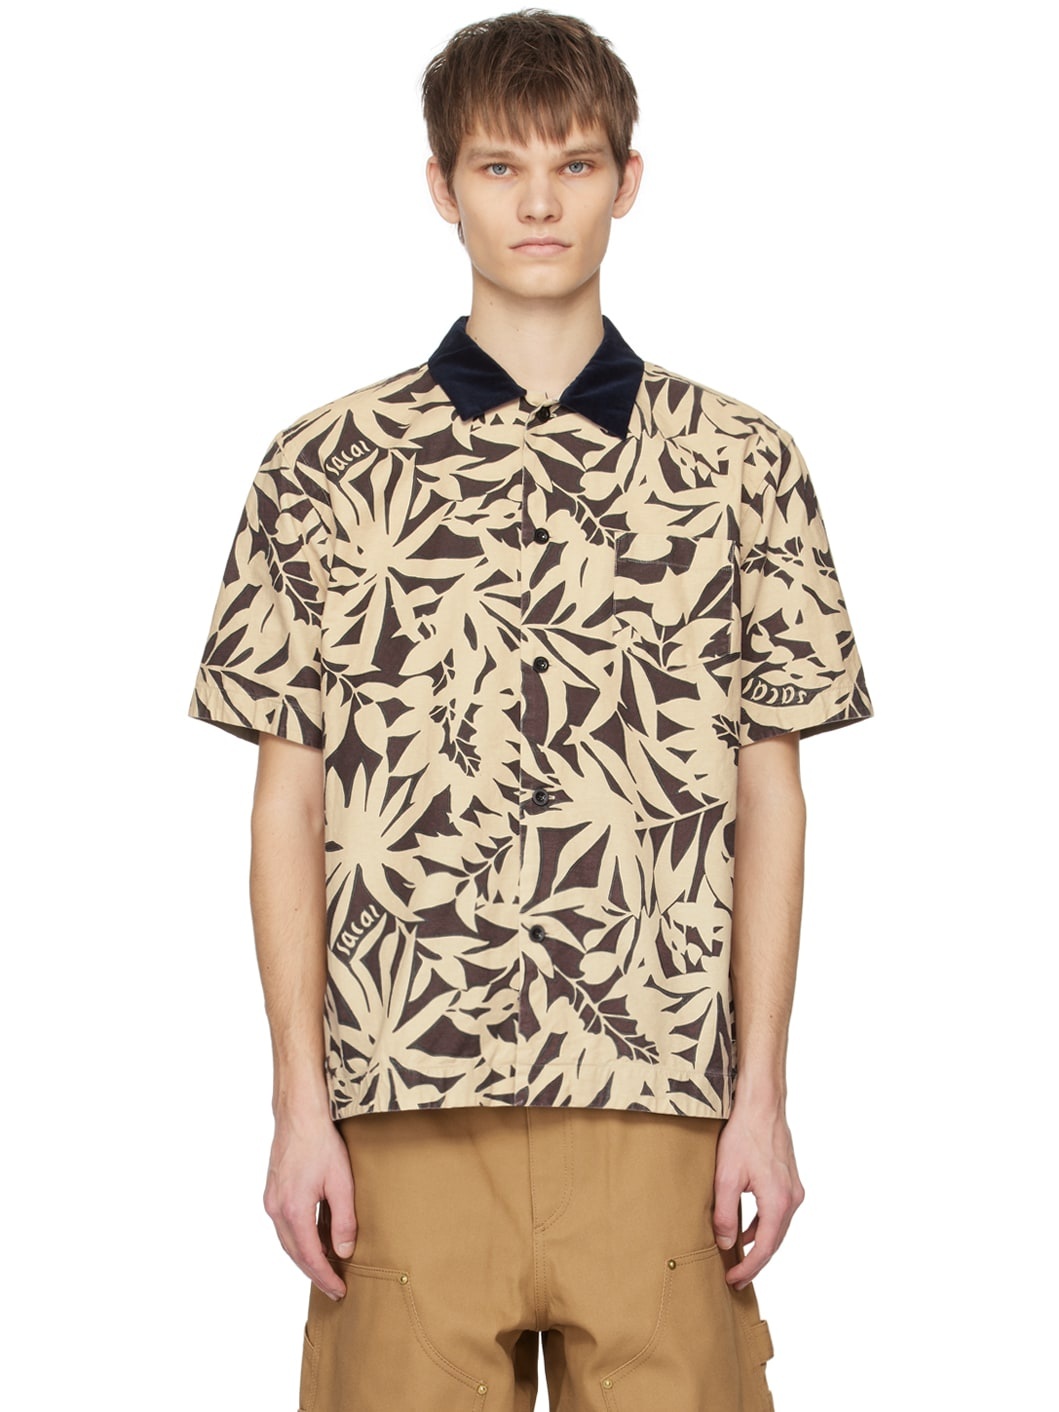 Brown & Beige Leaf Shirt - 1